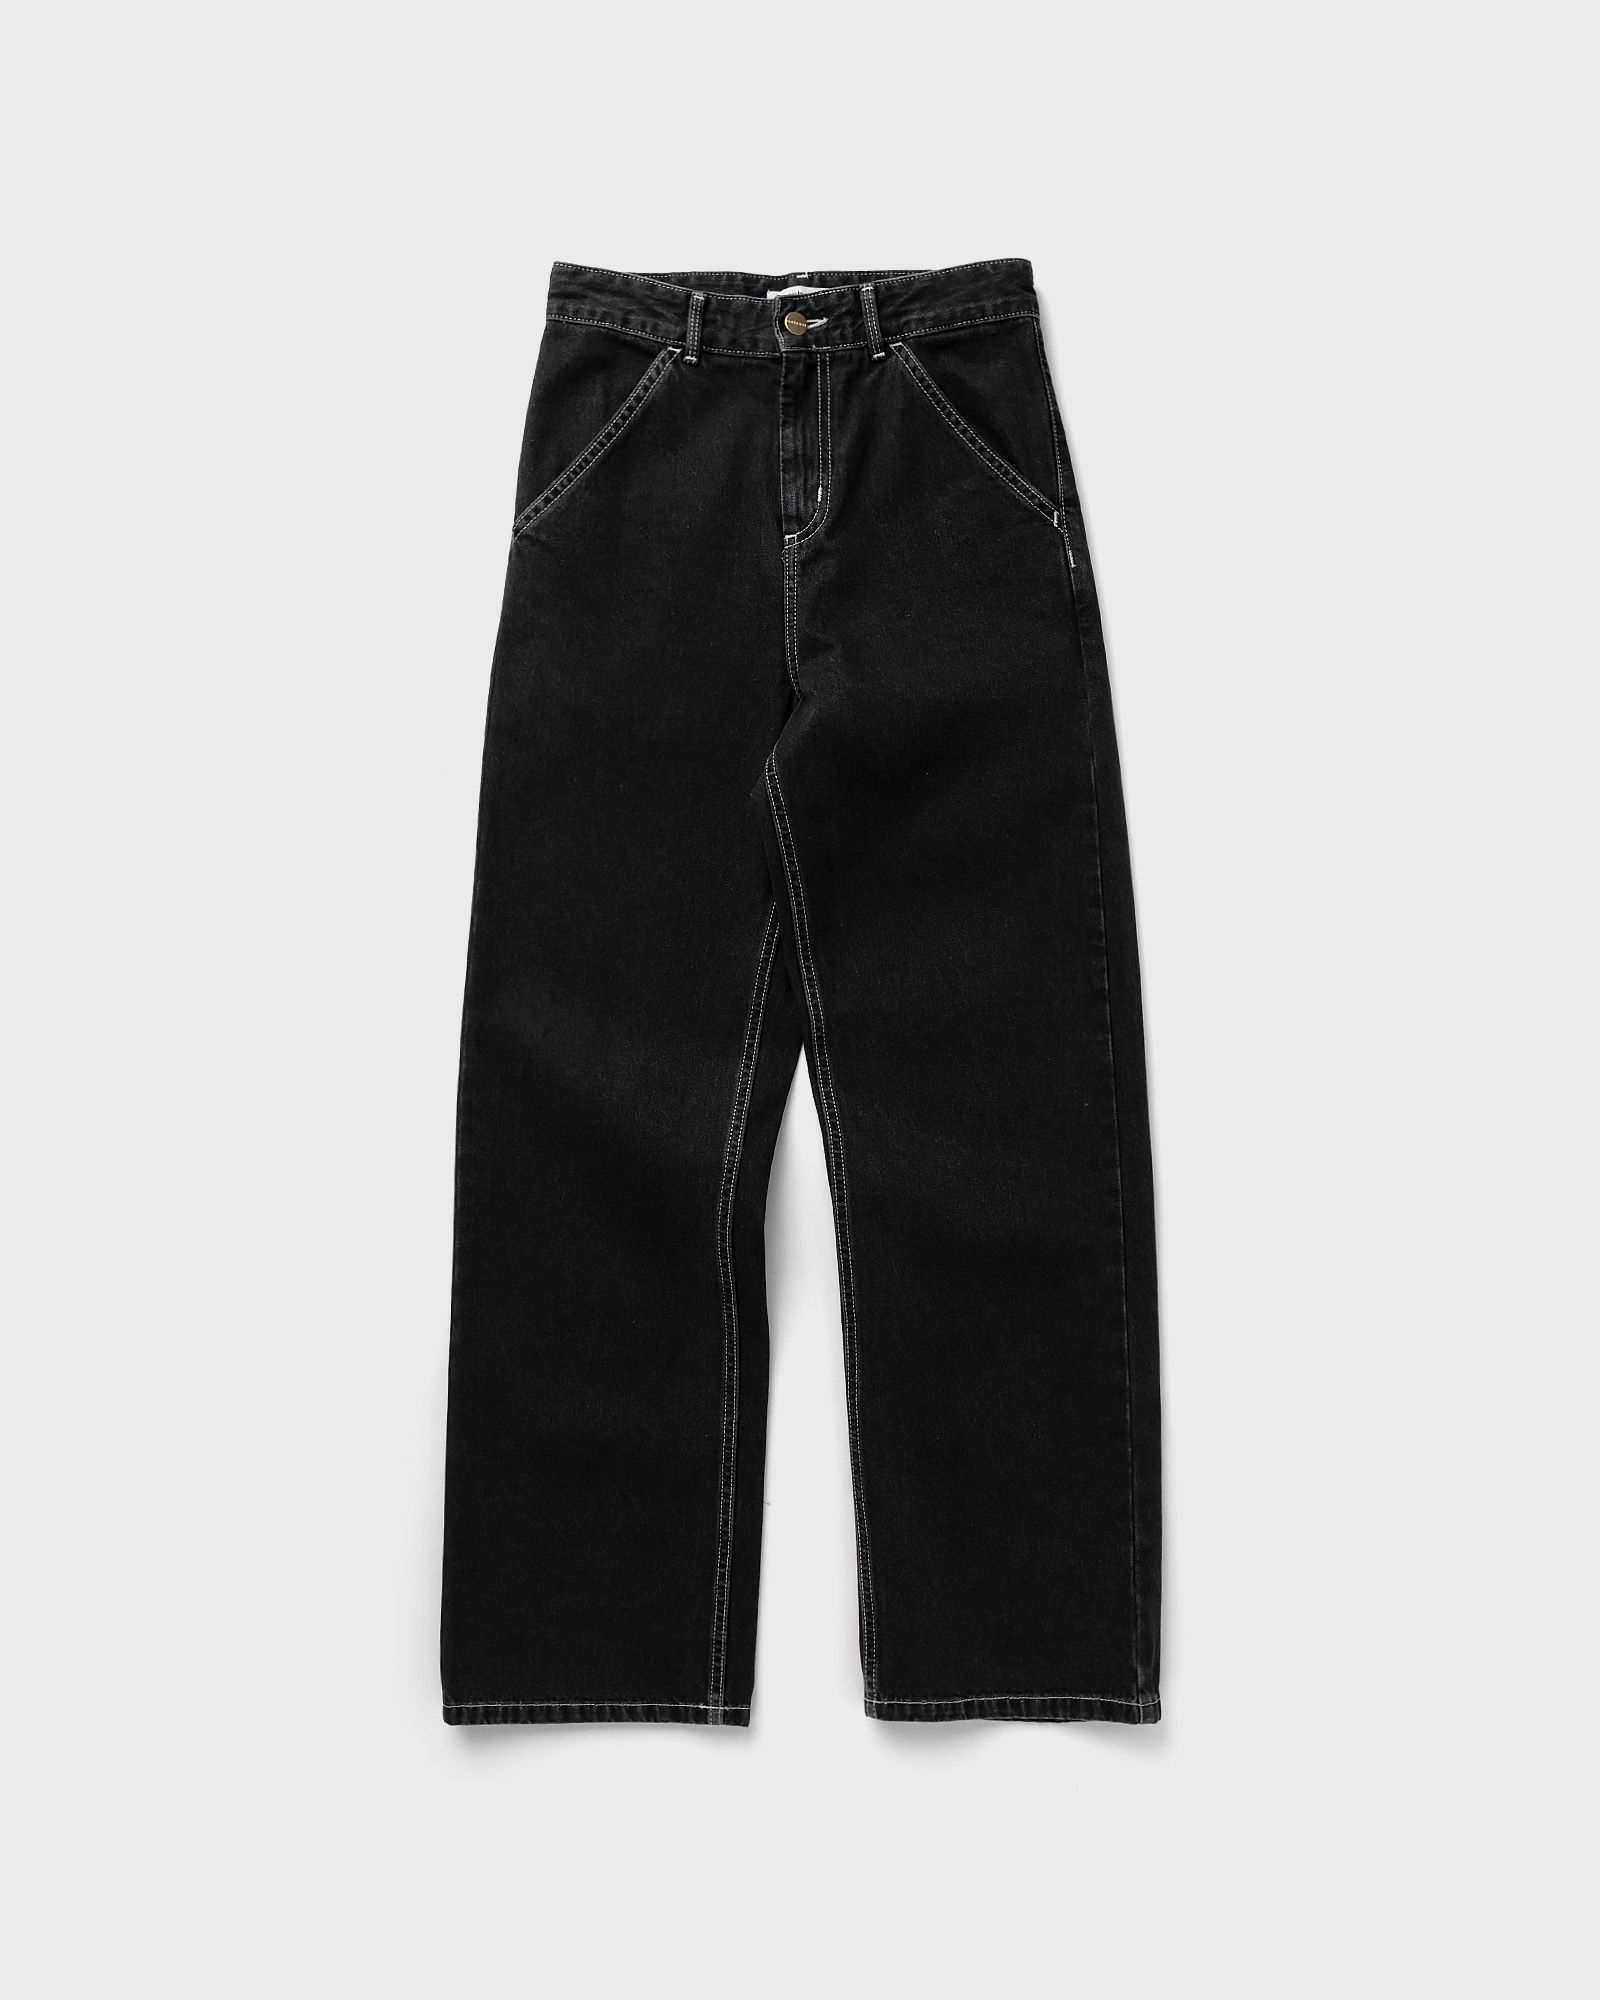 Carhartt WIP - wmns simple pant women jeans black in größe:m